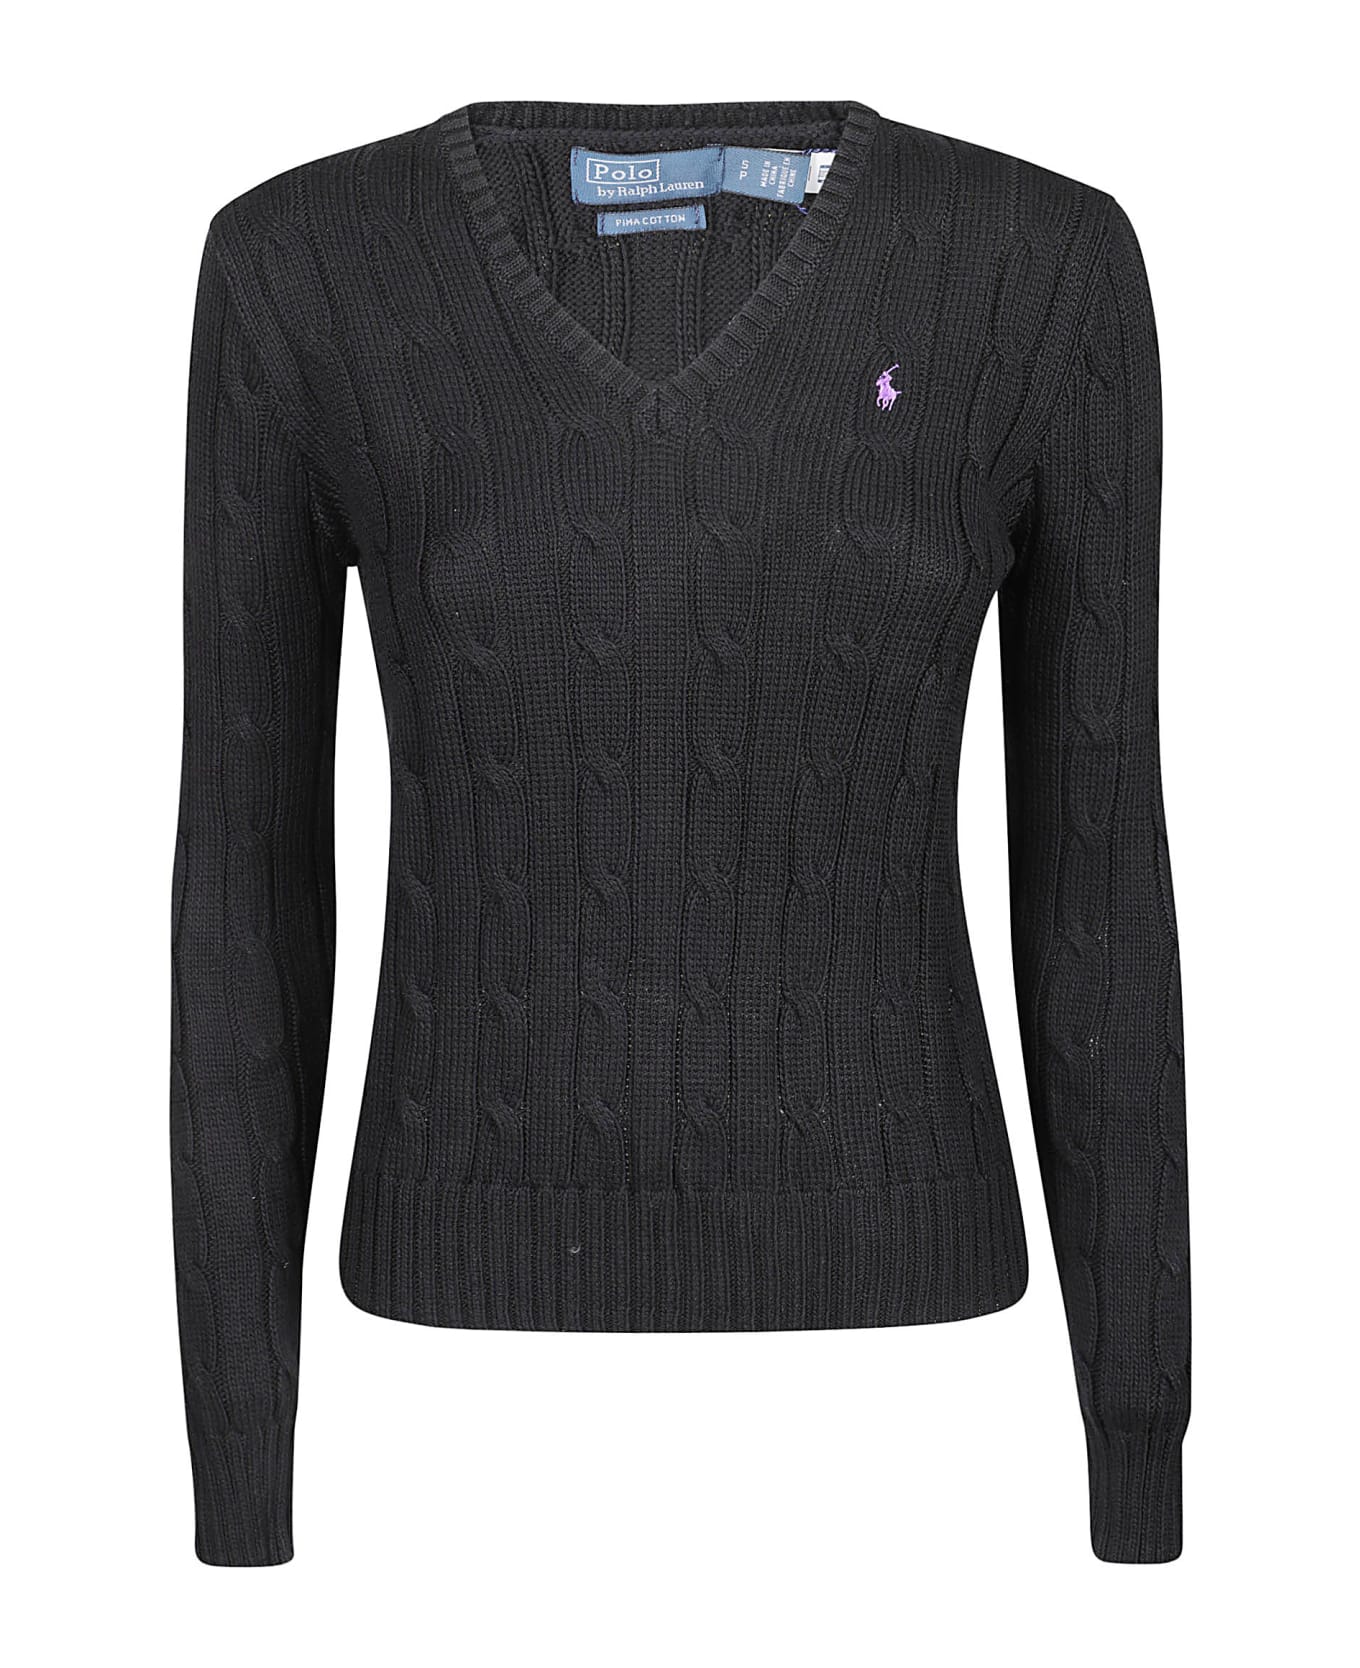 Polo Ralph Lauren Kimberly Sweater - Black